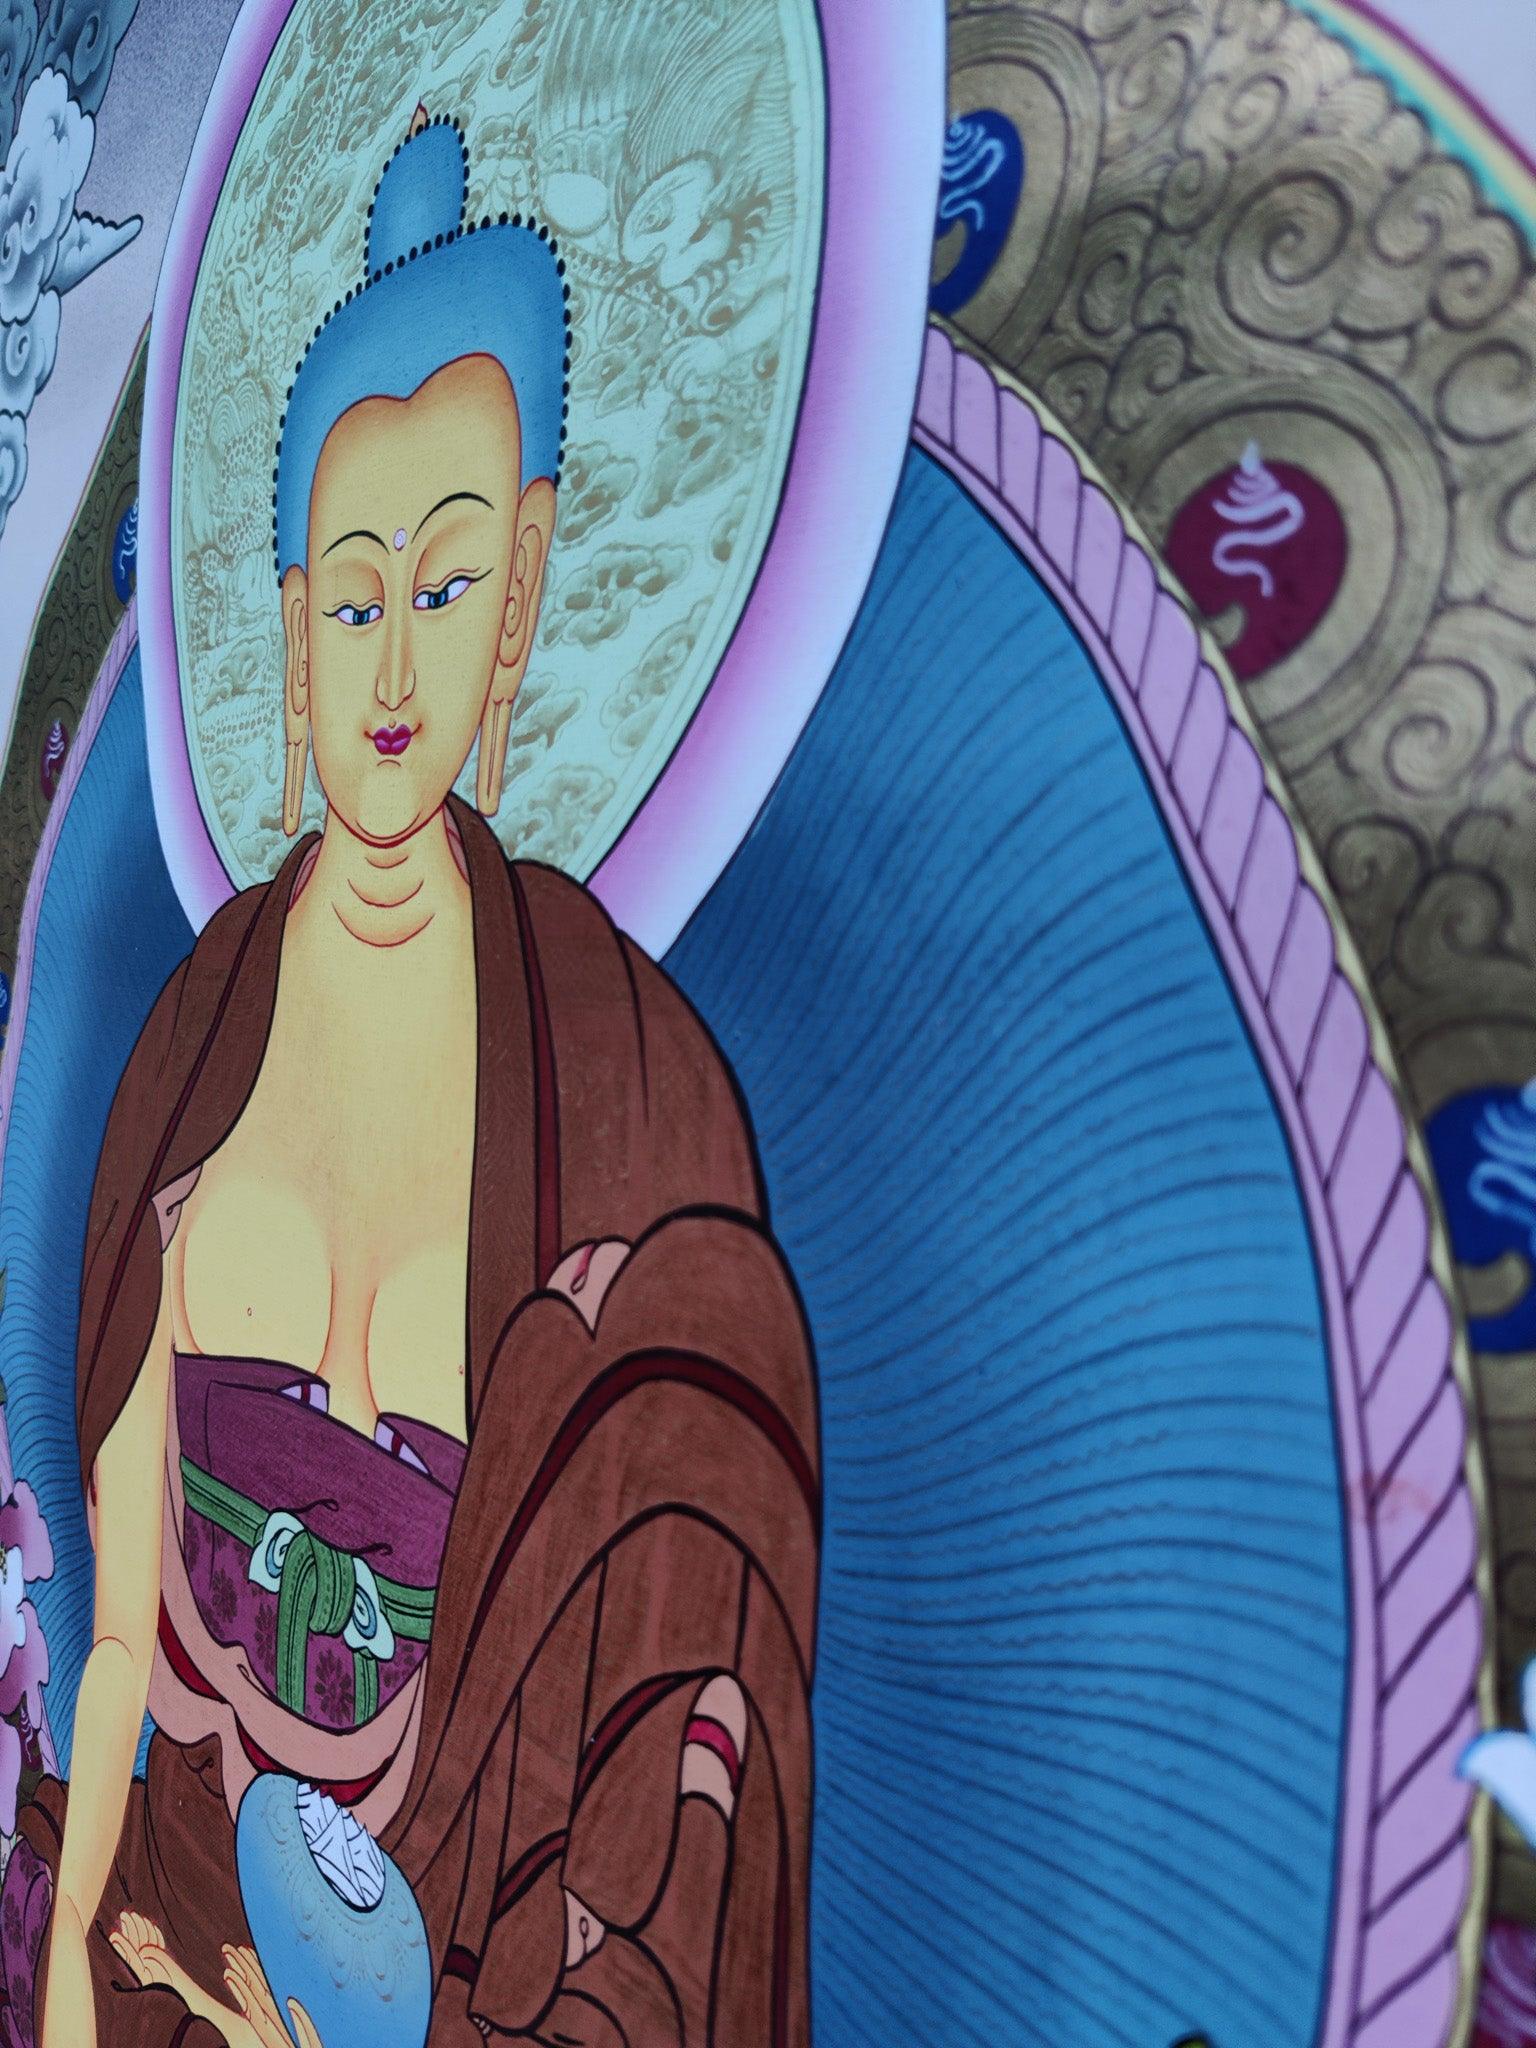 Master Piece Buddha Thanka Painting on cotton canvas. A master Piece Tibetan Thangka art. Best Quality. Best Price